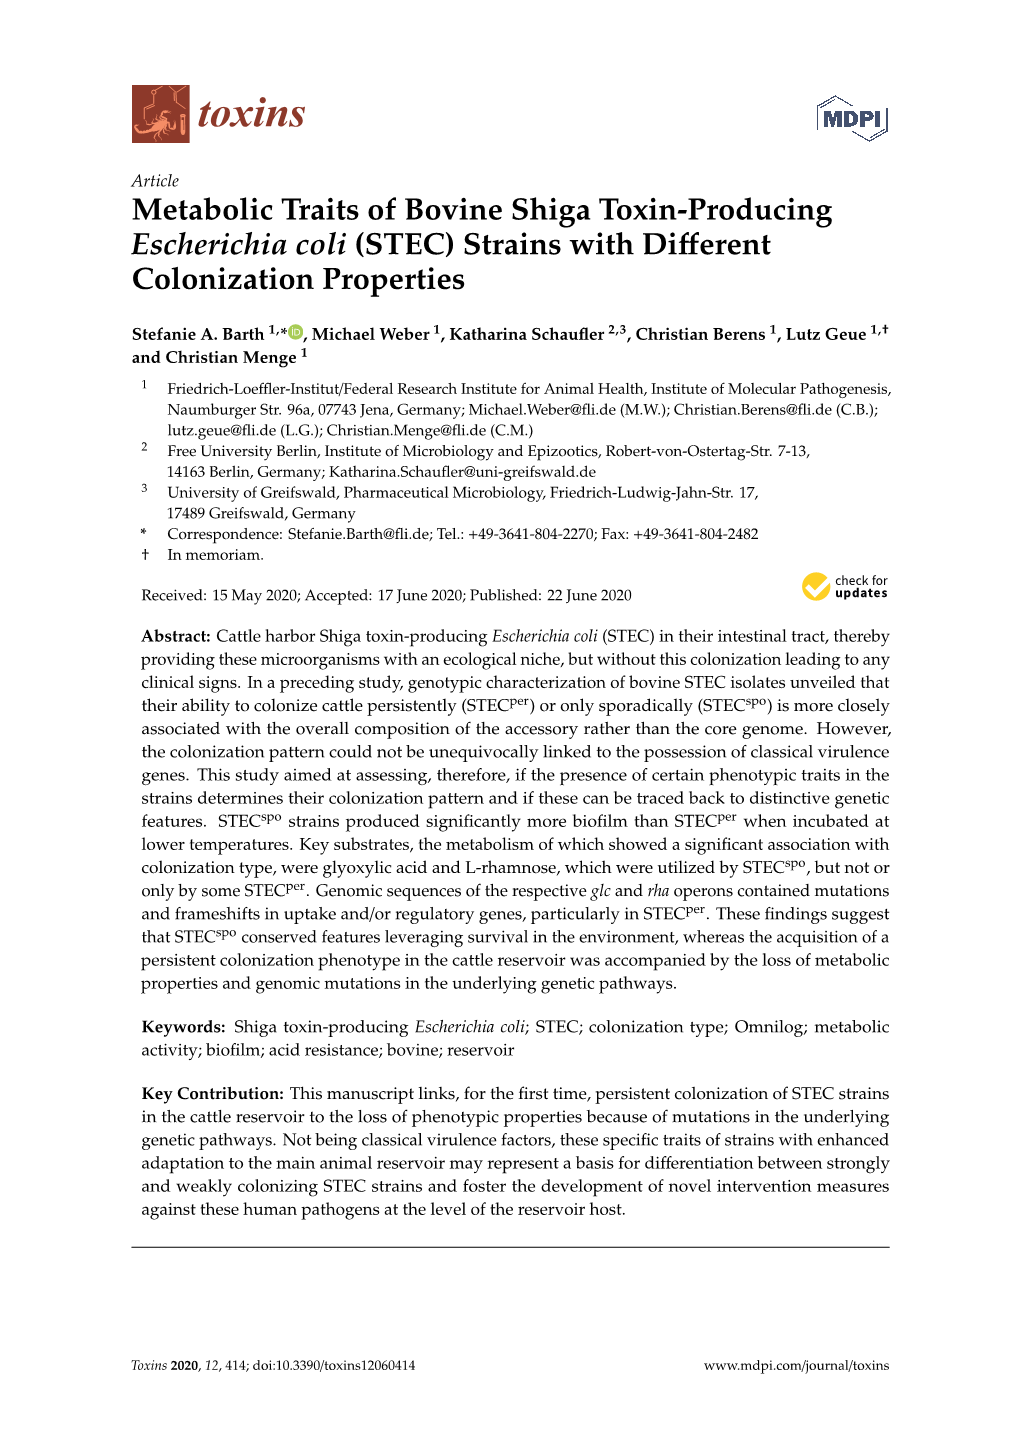 Metabolic Traits of Bovine Shiga Toxin-Producing Escherichia Coli (STEC) Strains with Diﬀerent Colonization Properties